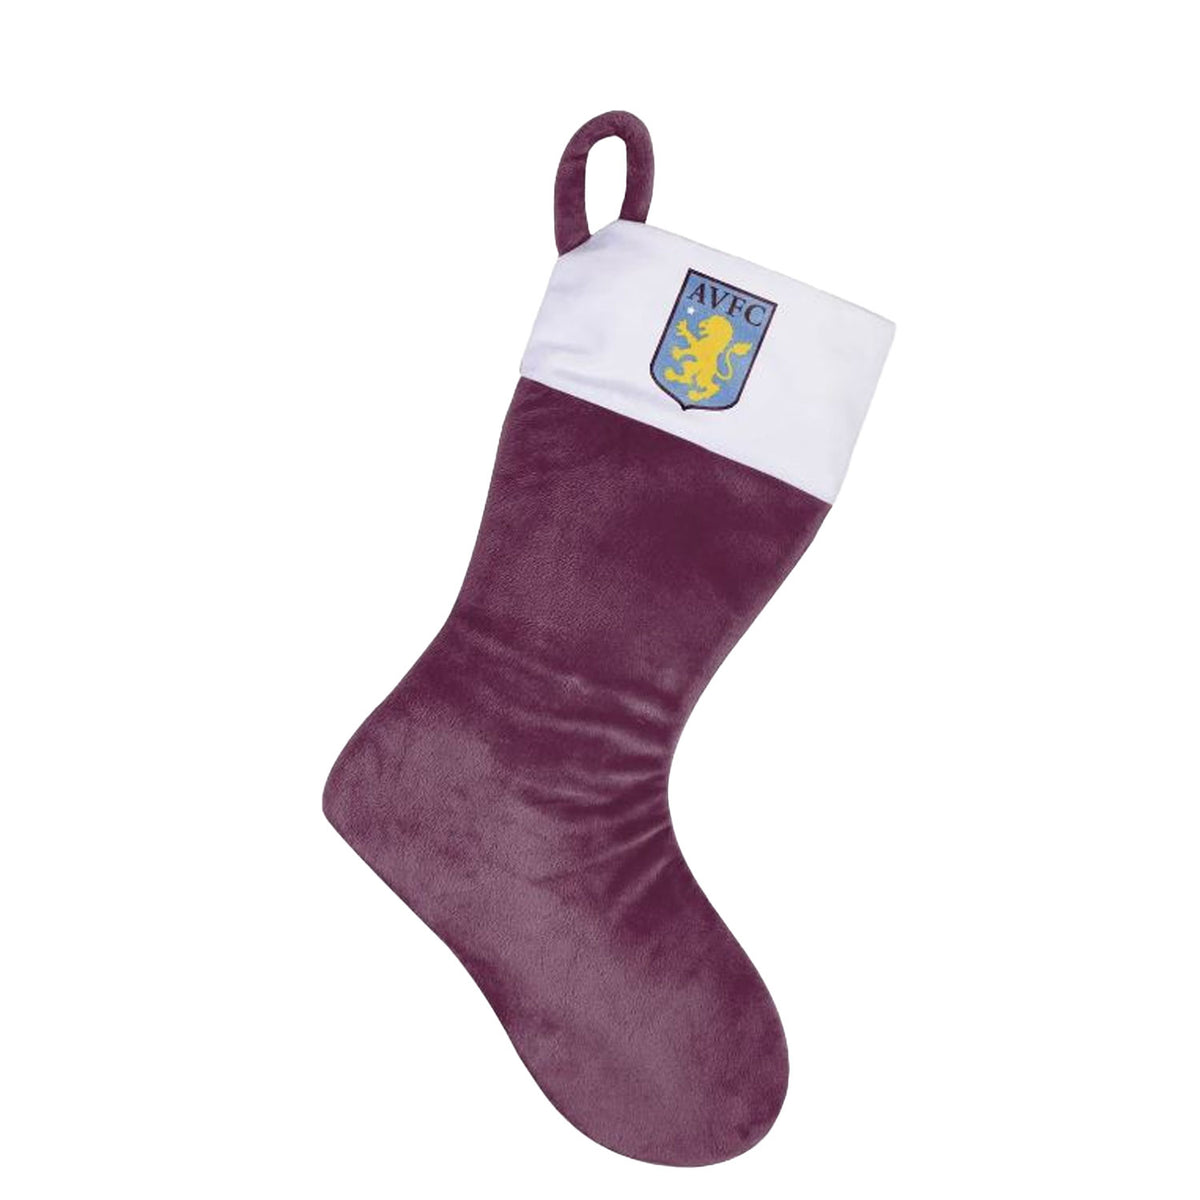 Aston Villa FC Crest Christmas Stocking